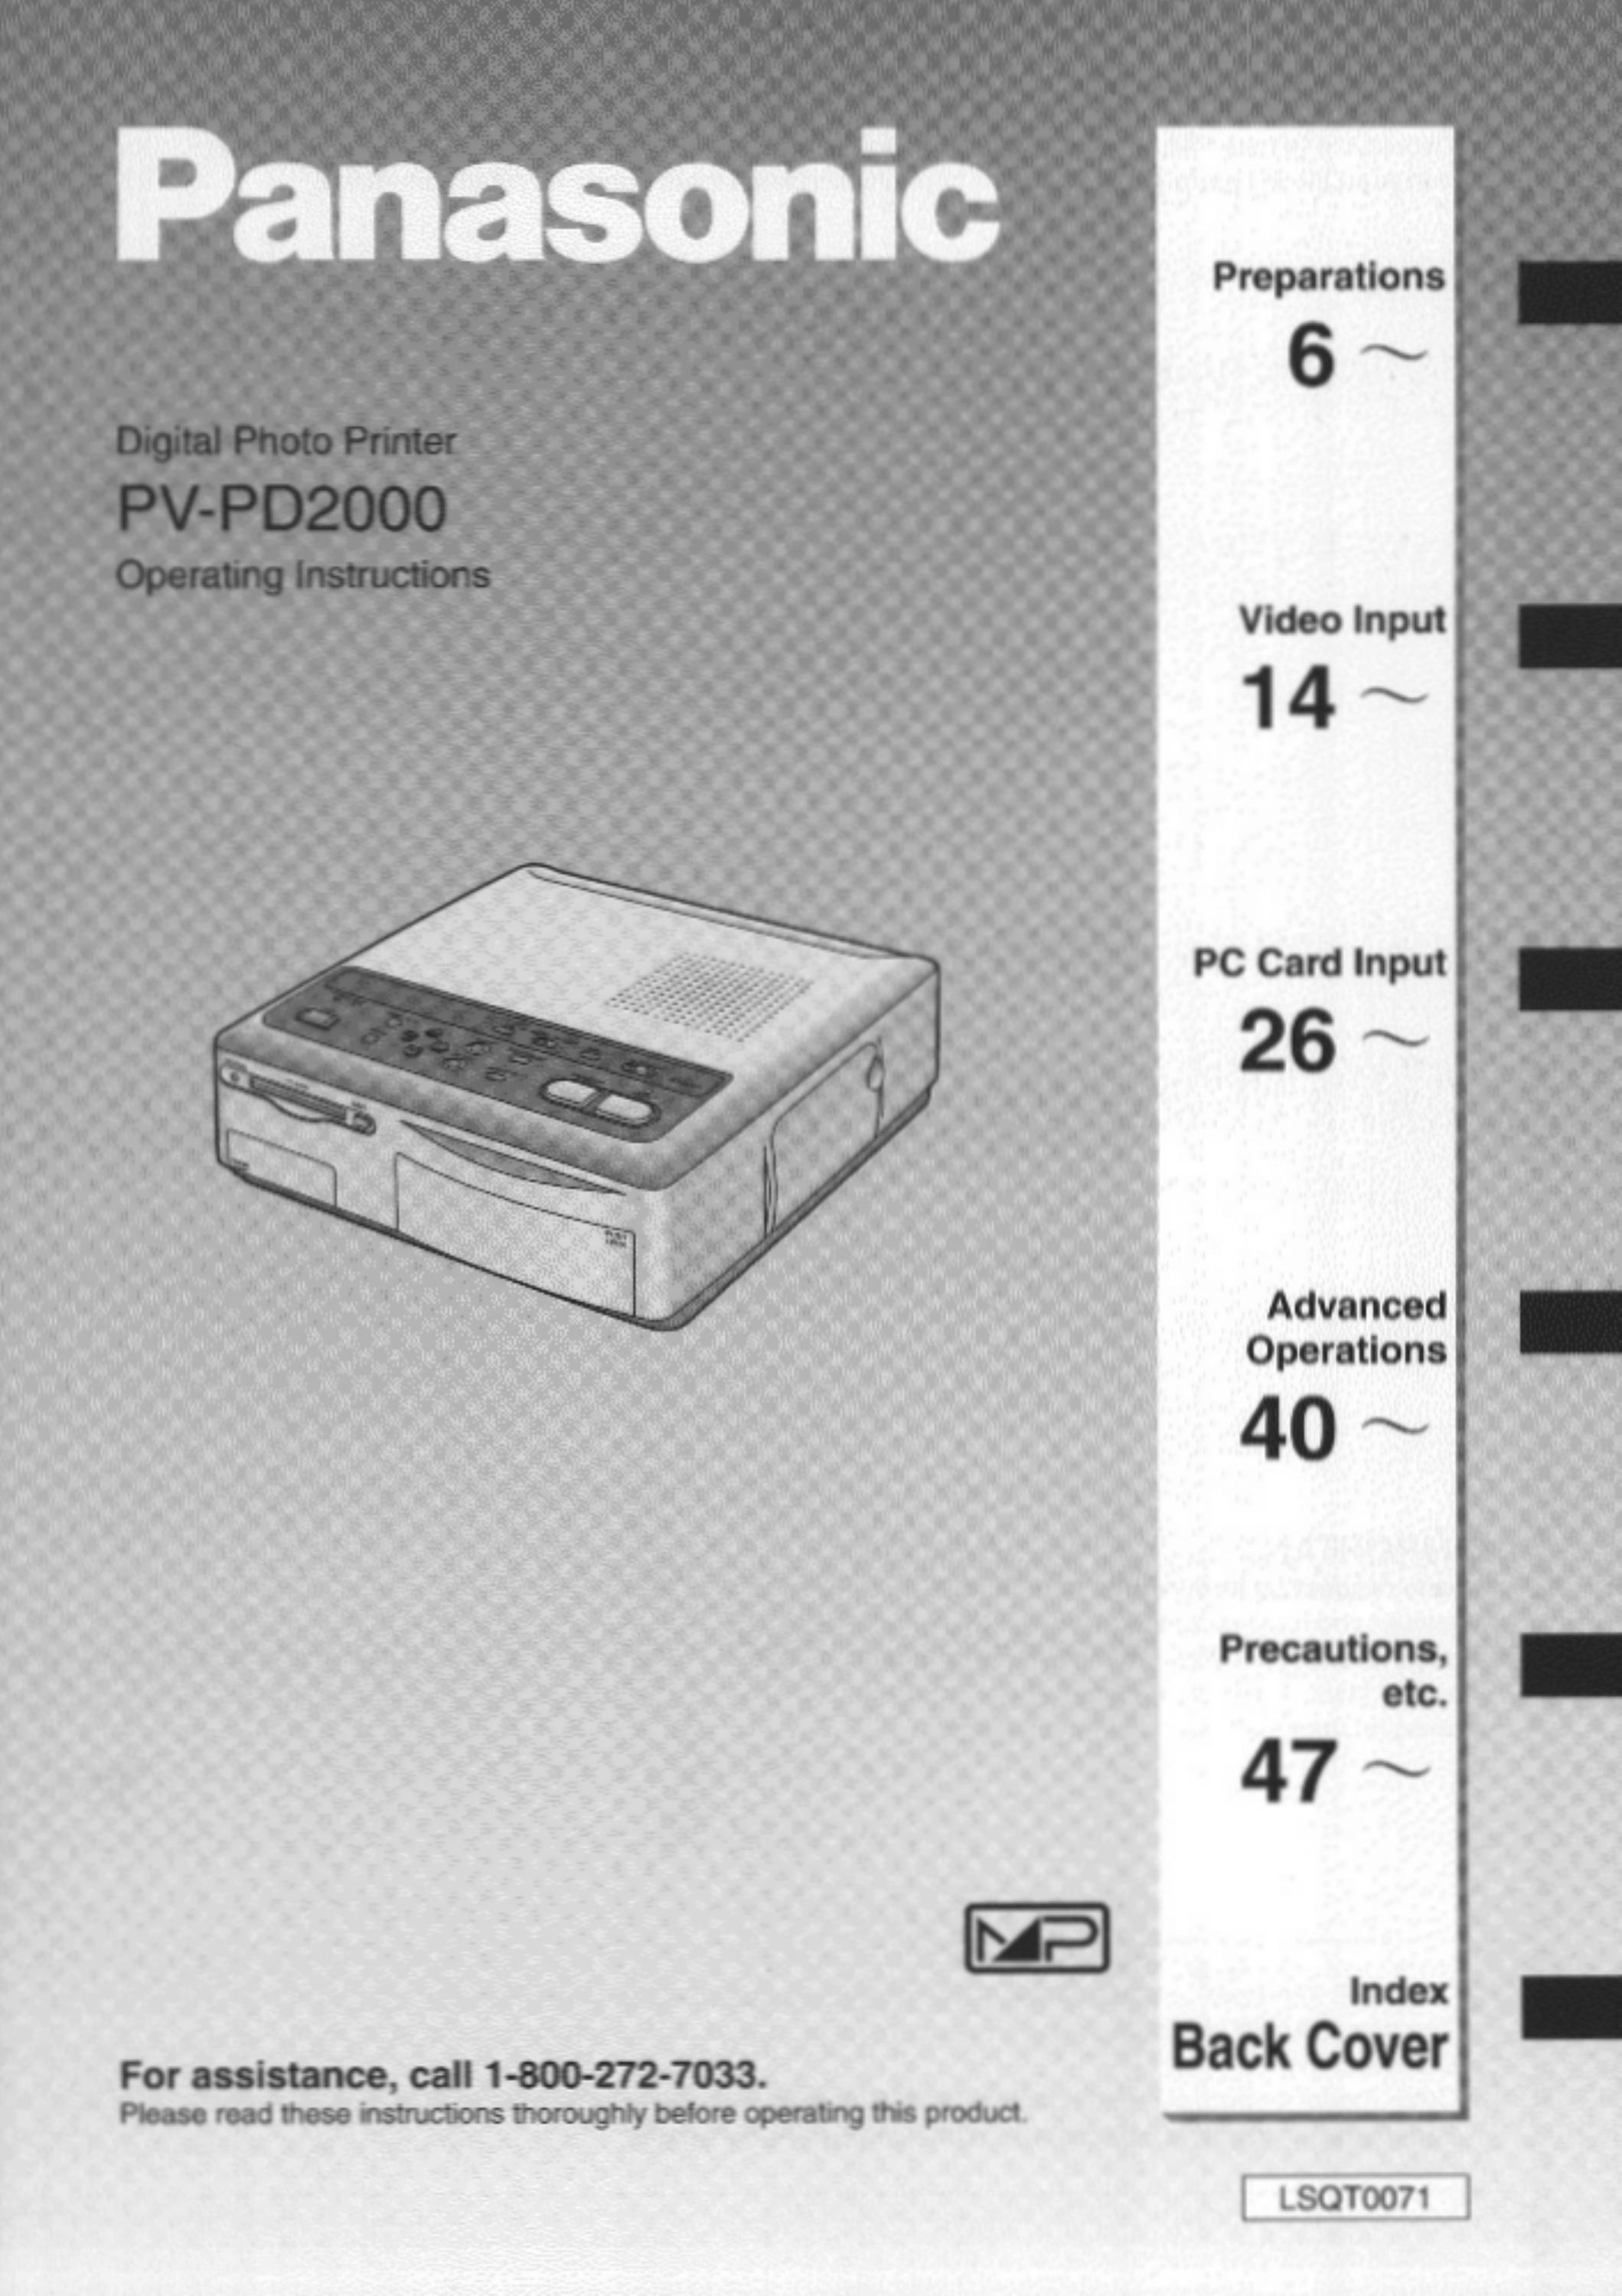 Panasonic PV-PD2000 Photo Printer User Manual